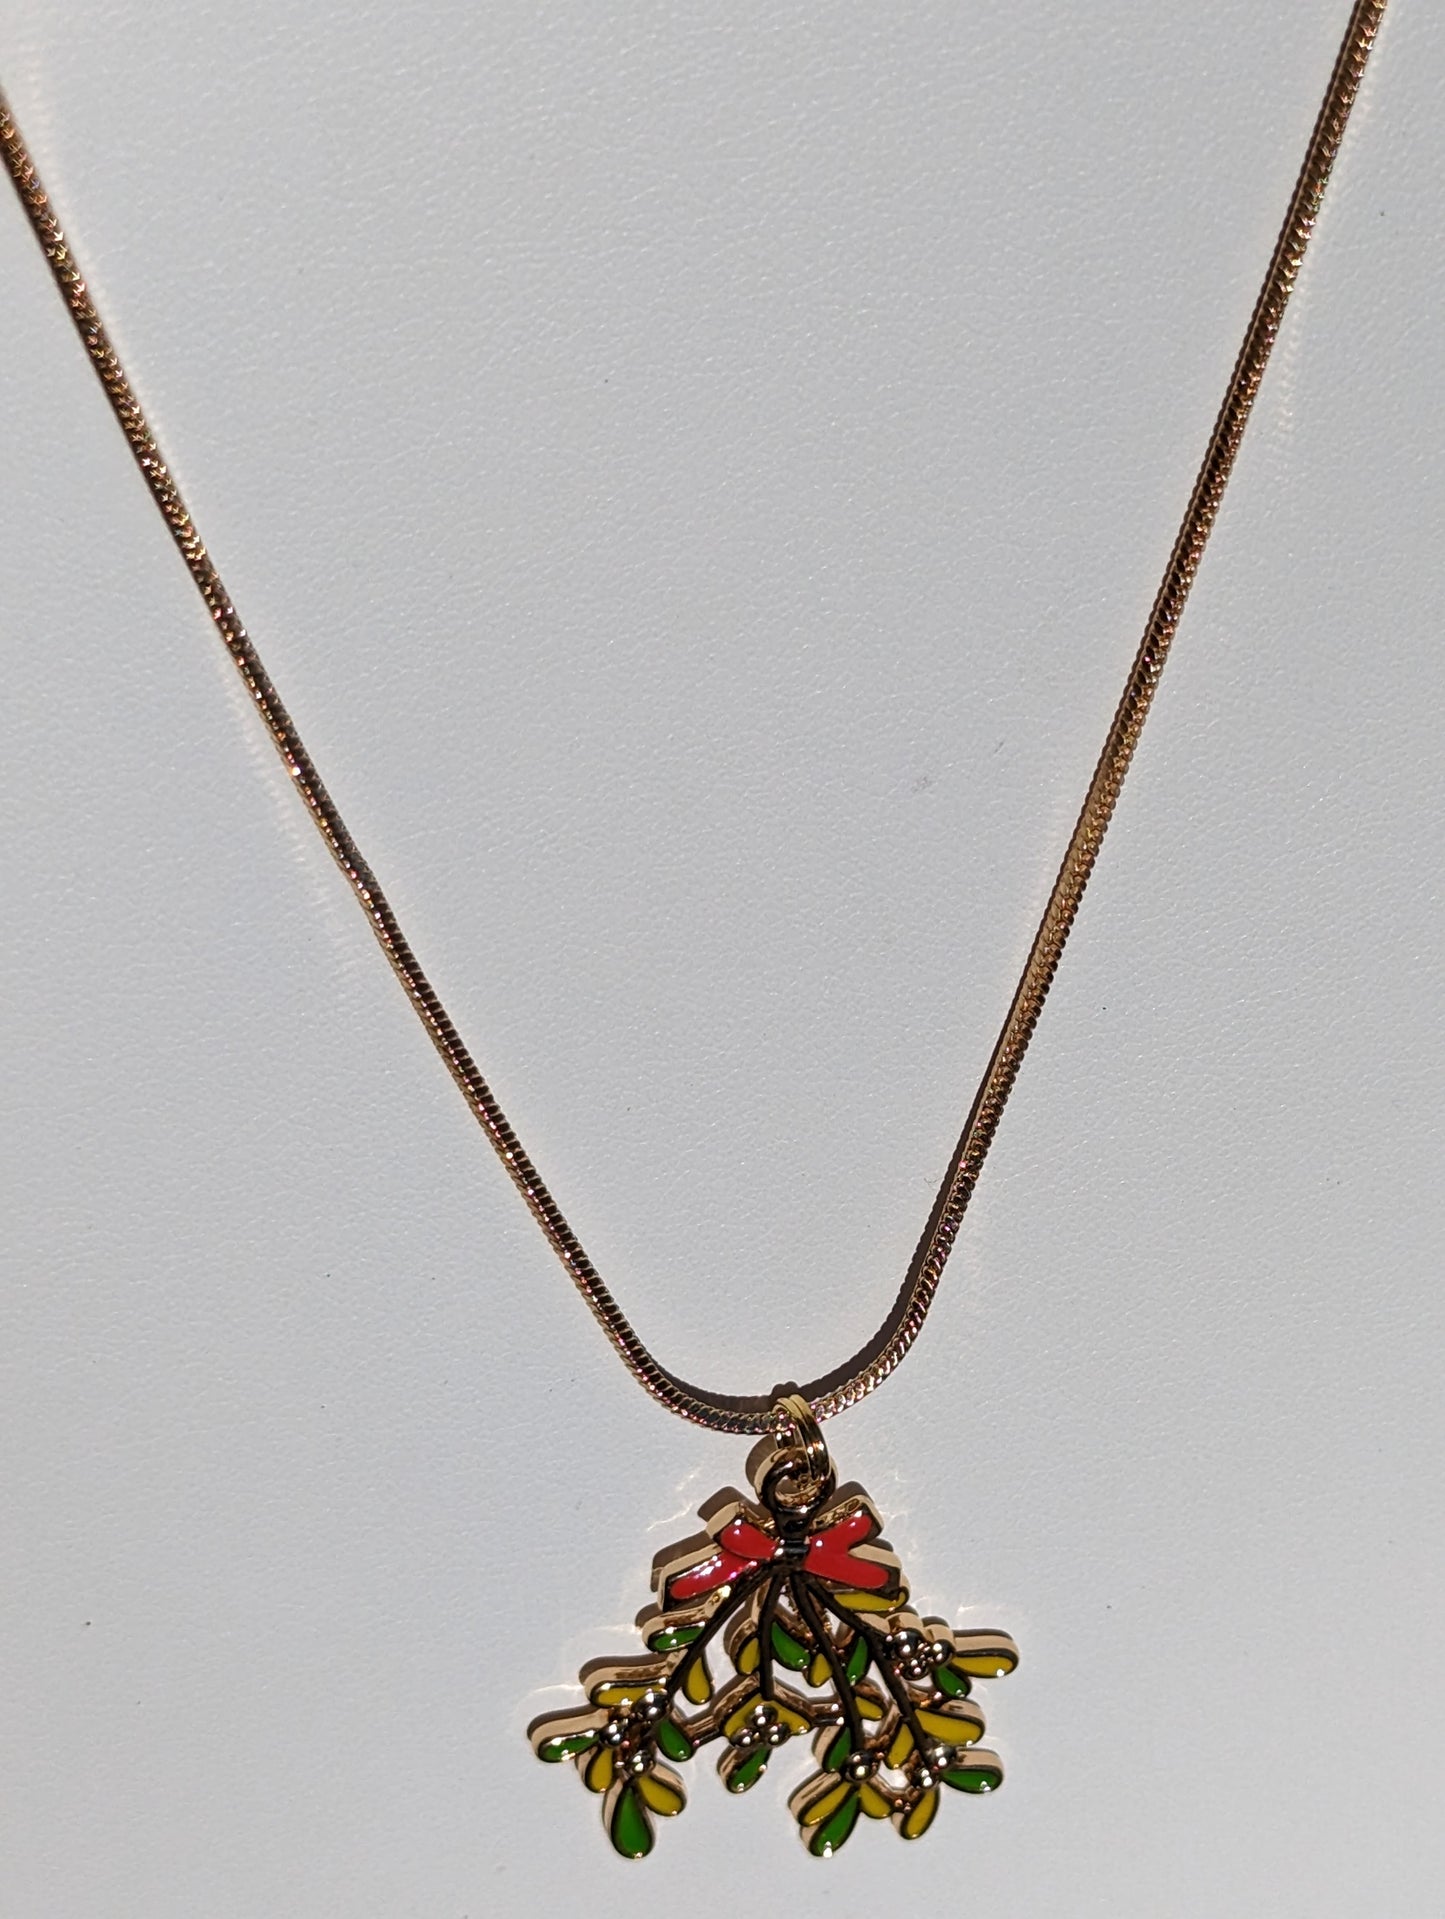 Golden Necklace with Mistletoe Pendant